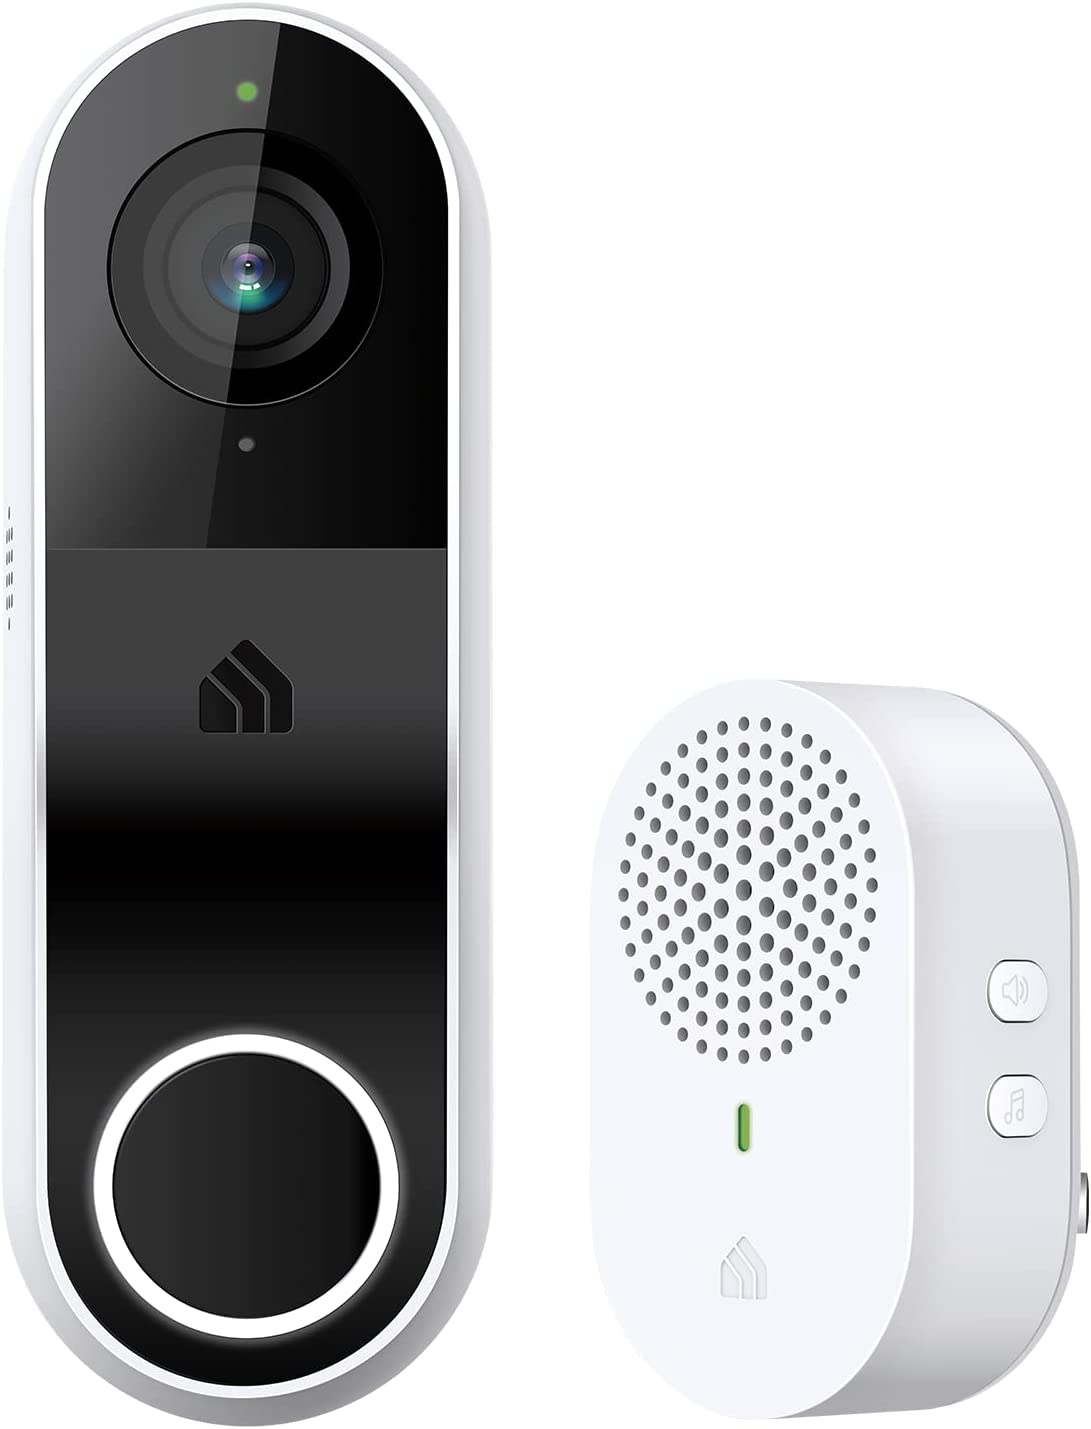 Kasa Smart Video Doorbell Camera – Just $48.29 at Amazon